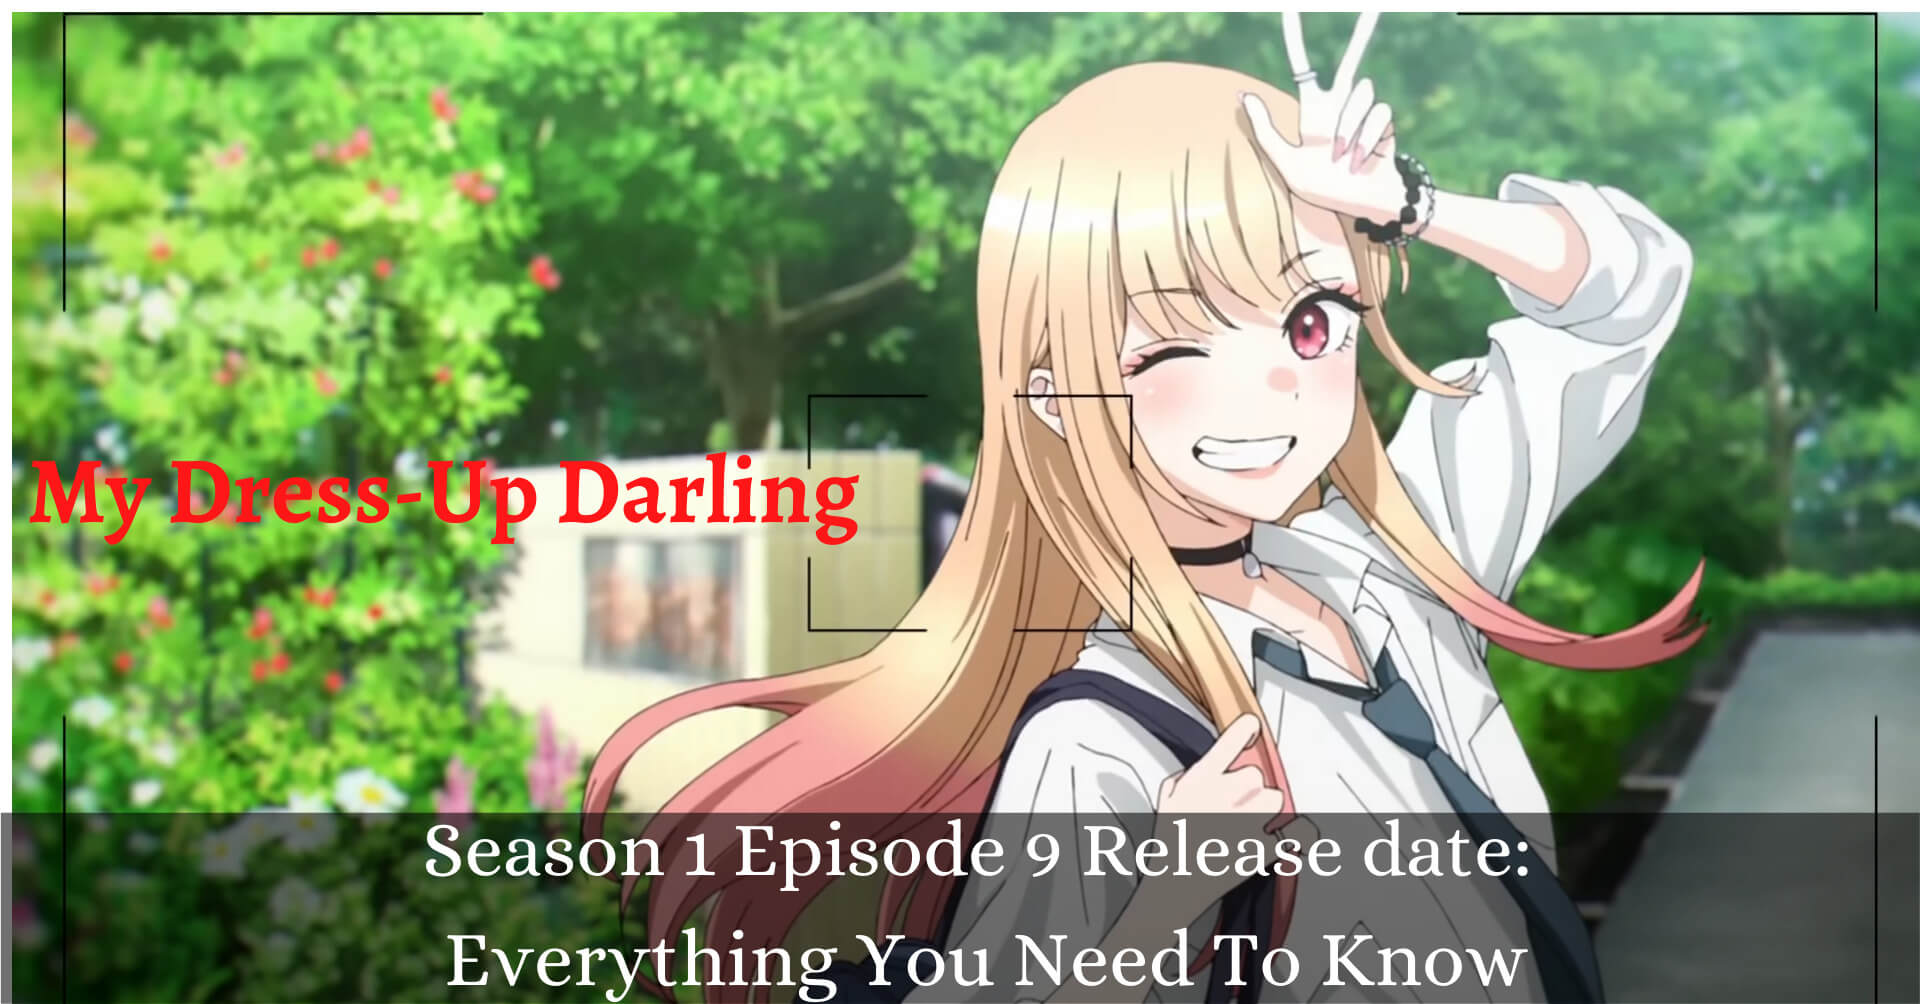 My Dress-Up Darling Season 1 Episode 9 Release date